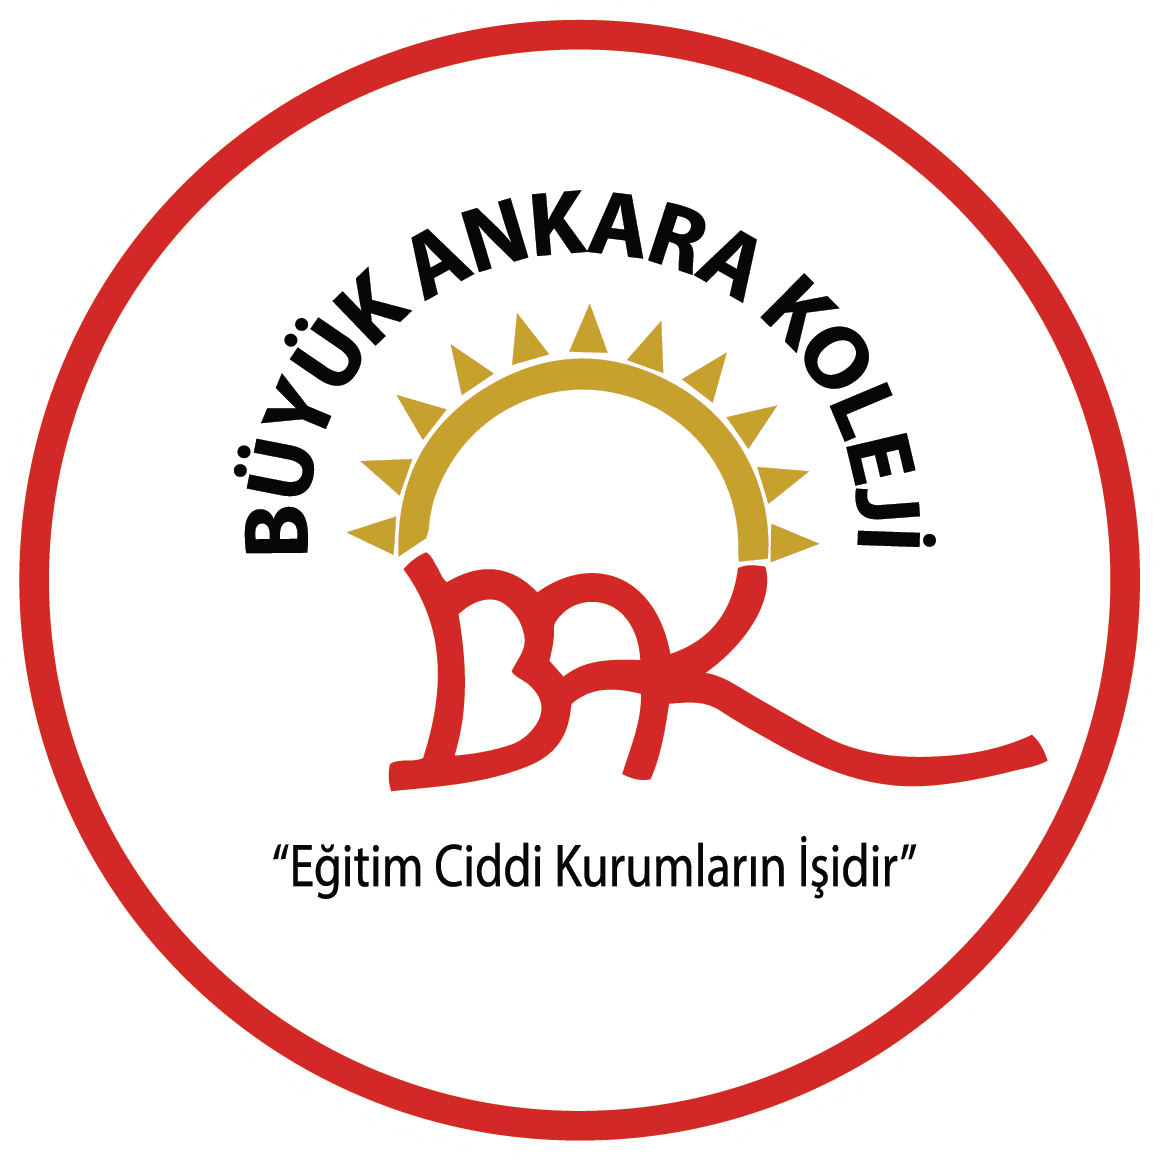 buyuk-ankara-koleji-logo